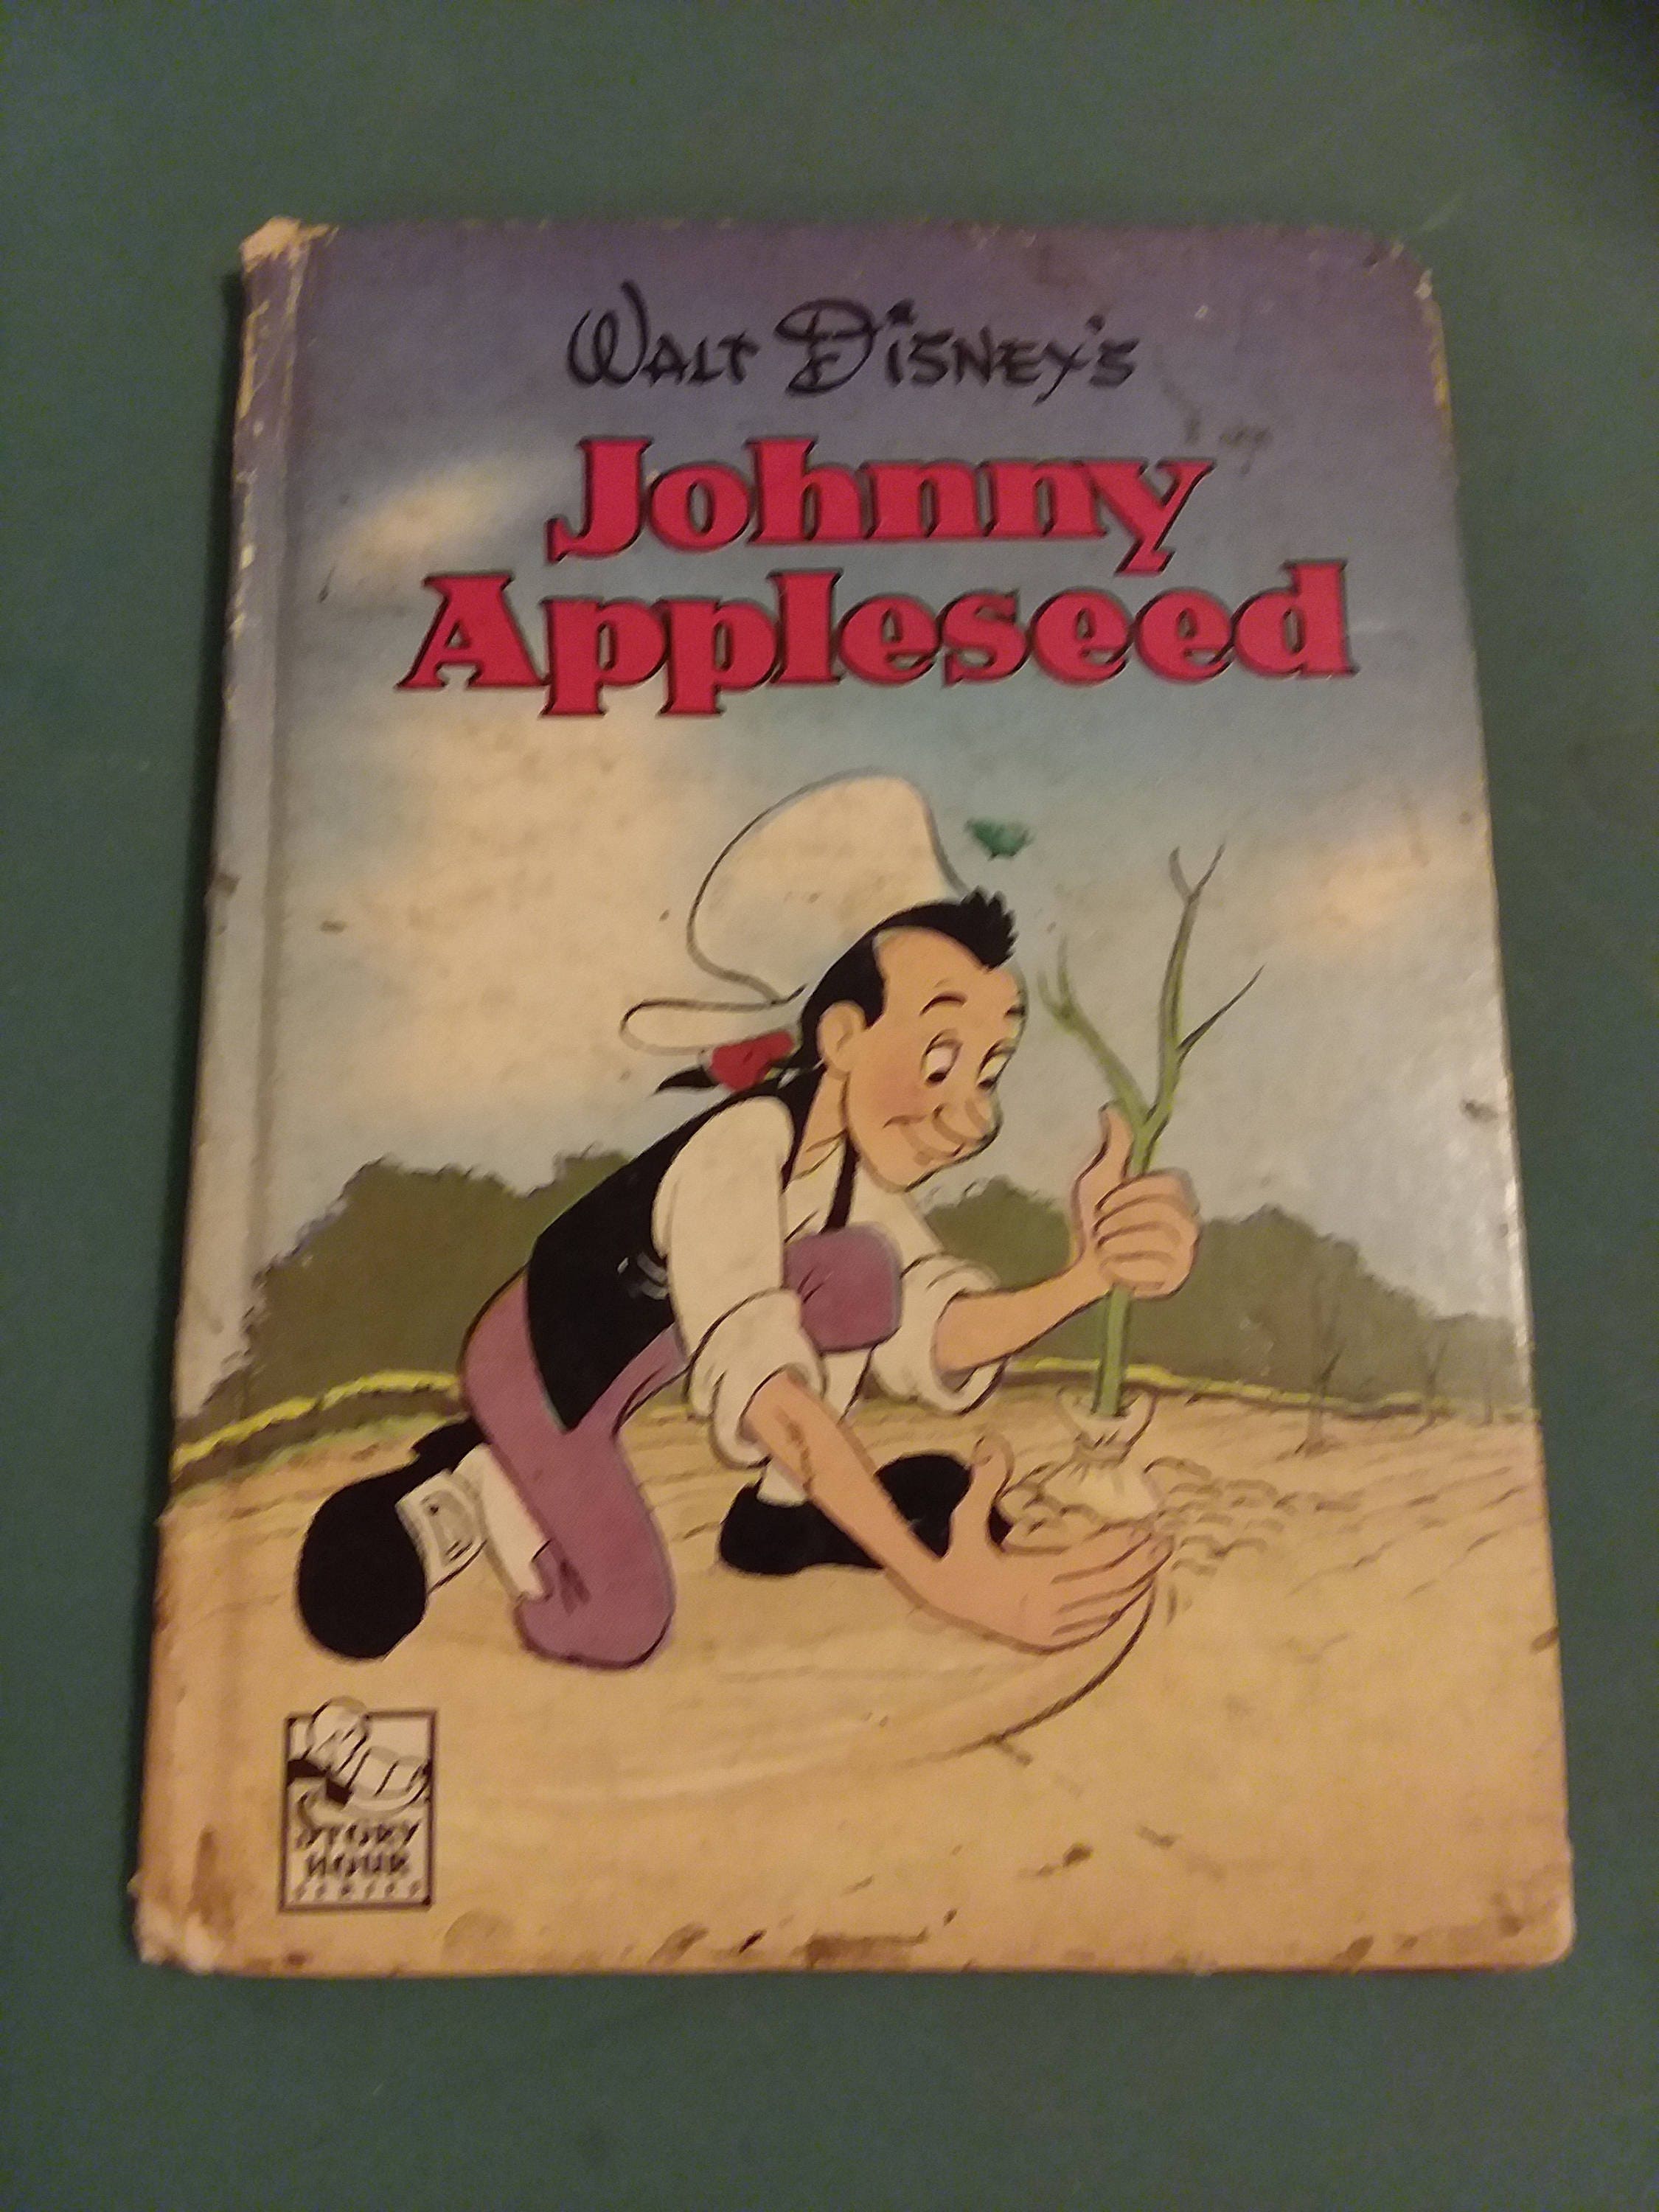 Disney Paint Book (1949) Whitman : Retro Reprints